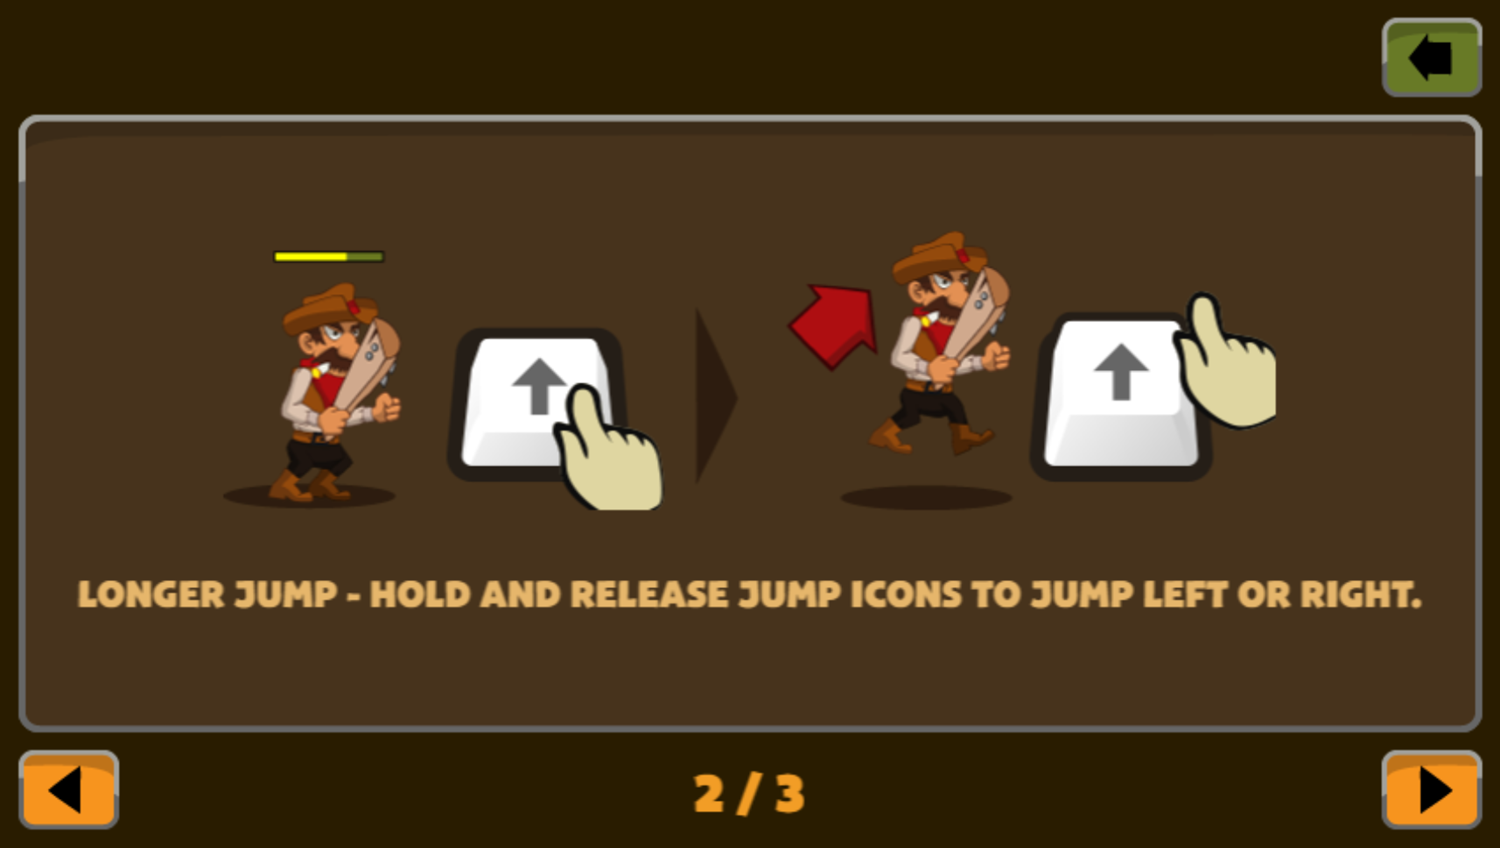 Zombies vs Halloween Game Instructions Screenshot.